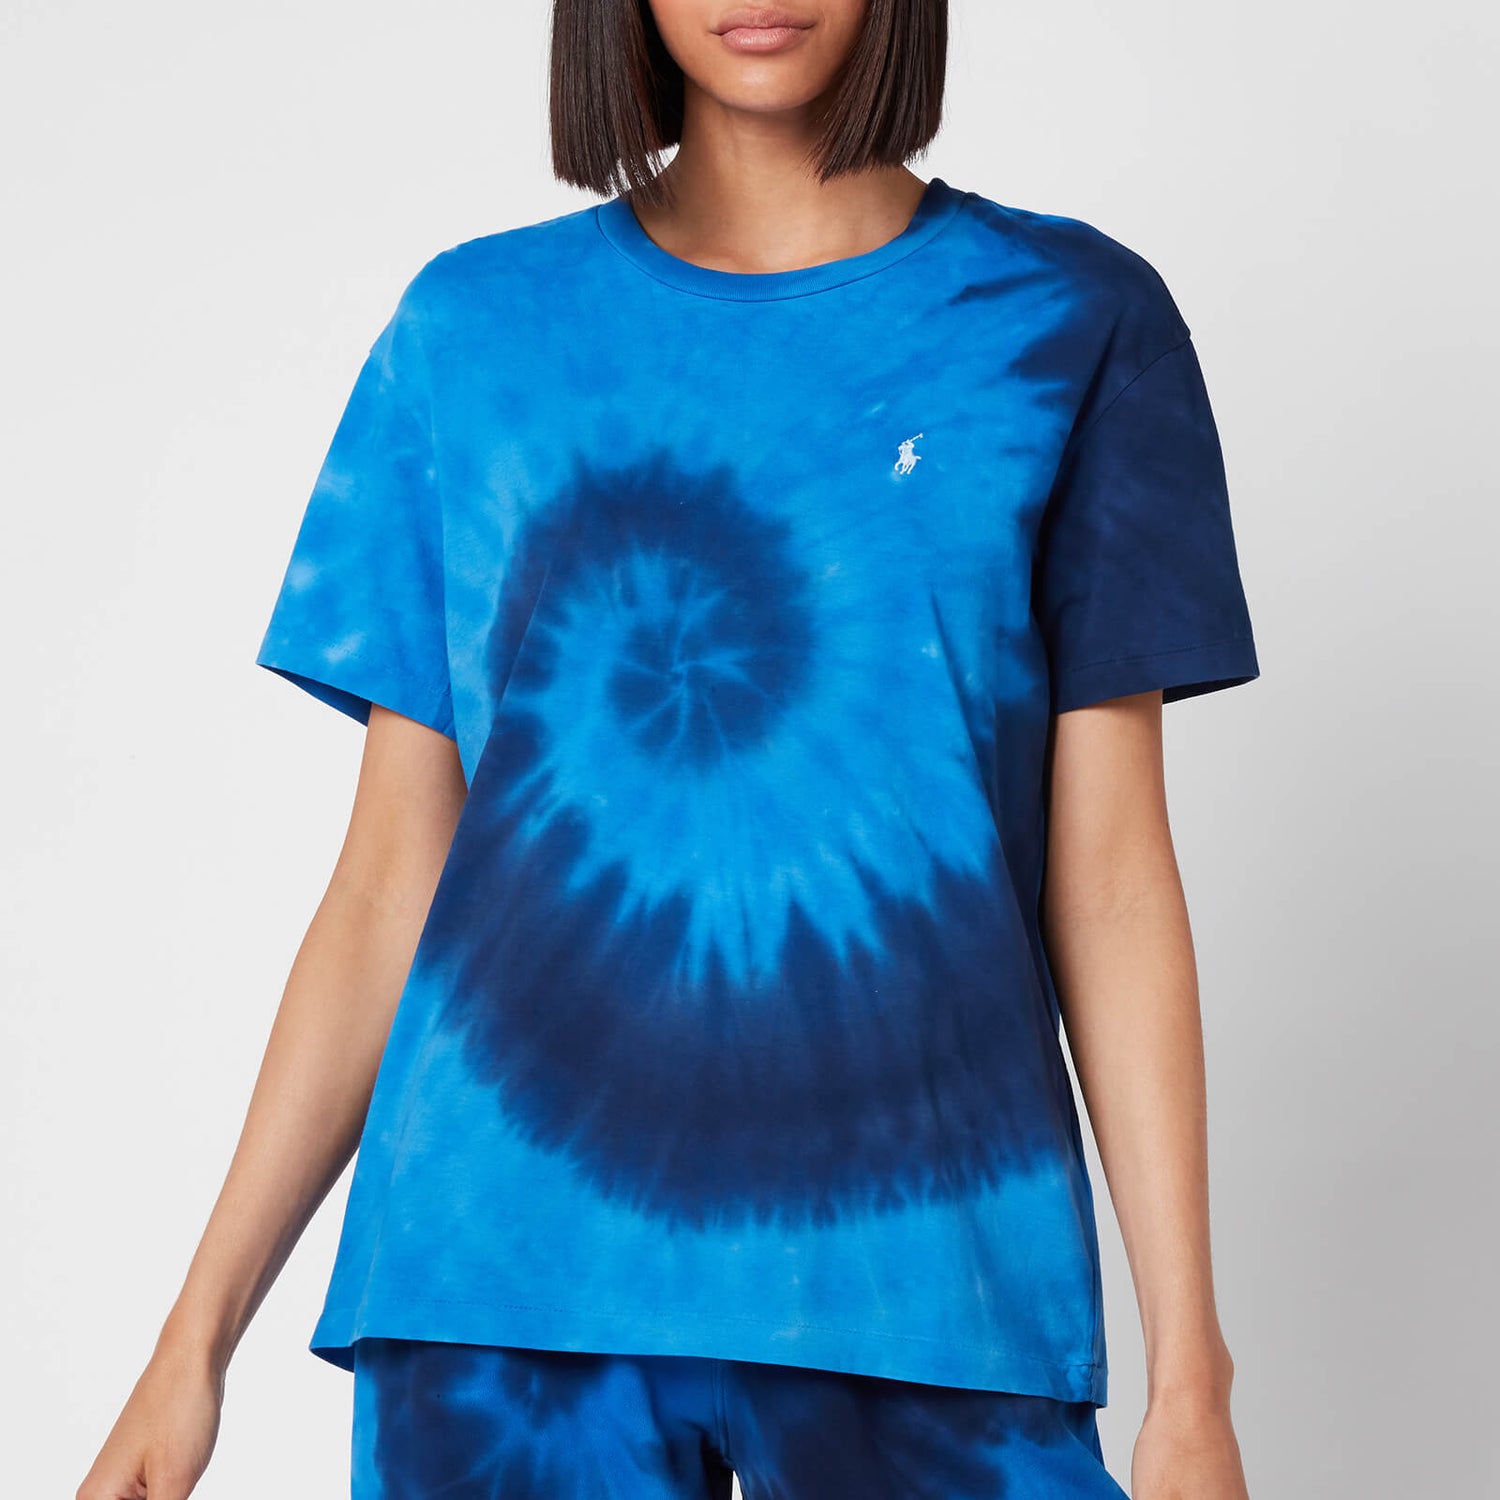 Polo Ralph Lauren Women's Tie Dye T-Shirt - Blue Ocean